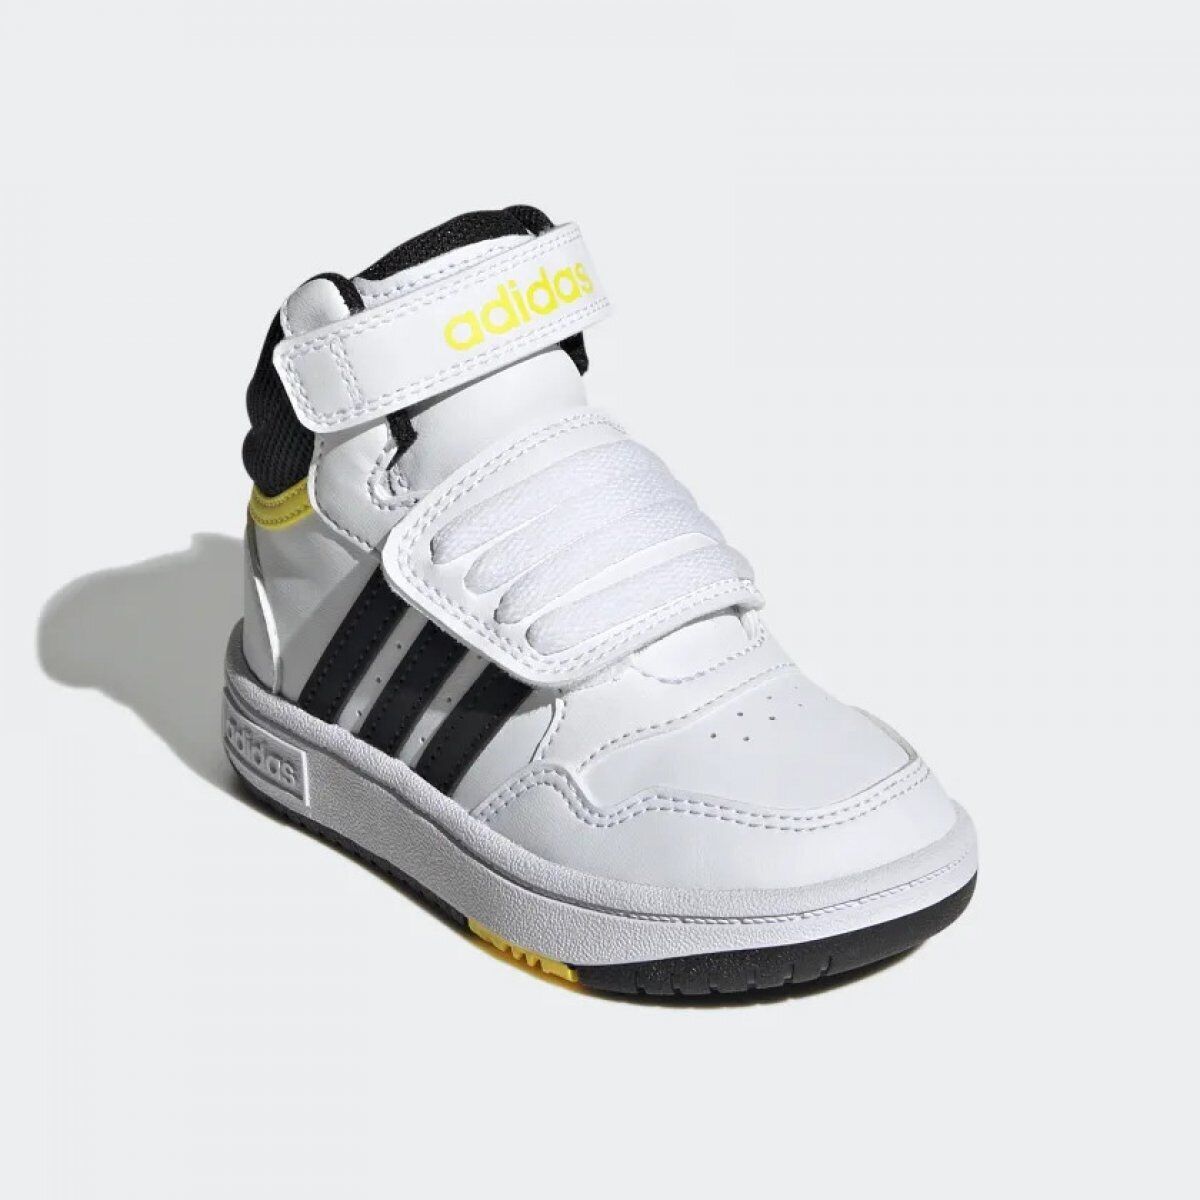 Кроссовки Adidas Hoops Mid 3.0 AC, белый/черный/желтый кроссовки adidas neo hoops 2 0 mid shoes white solar yellow белый